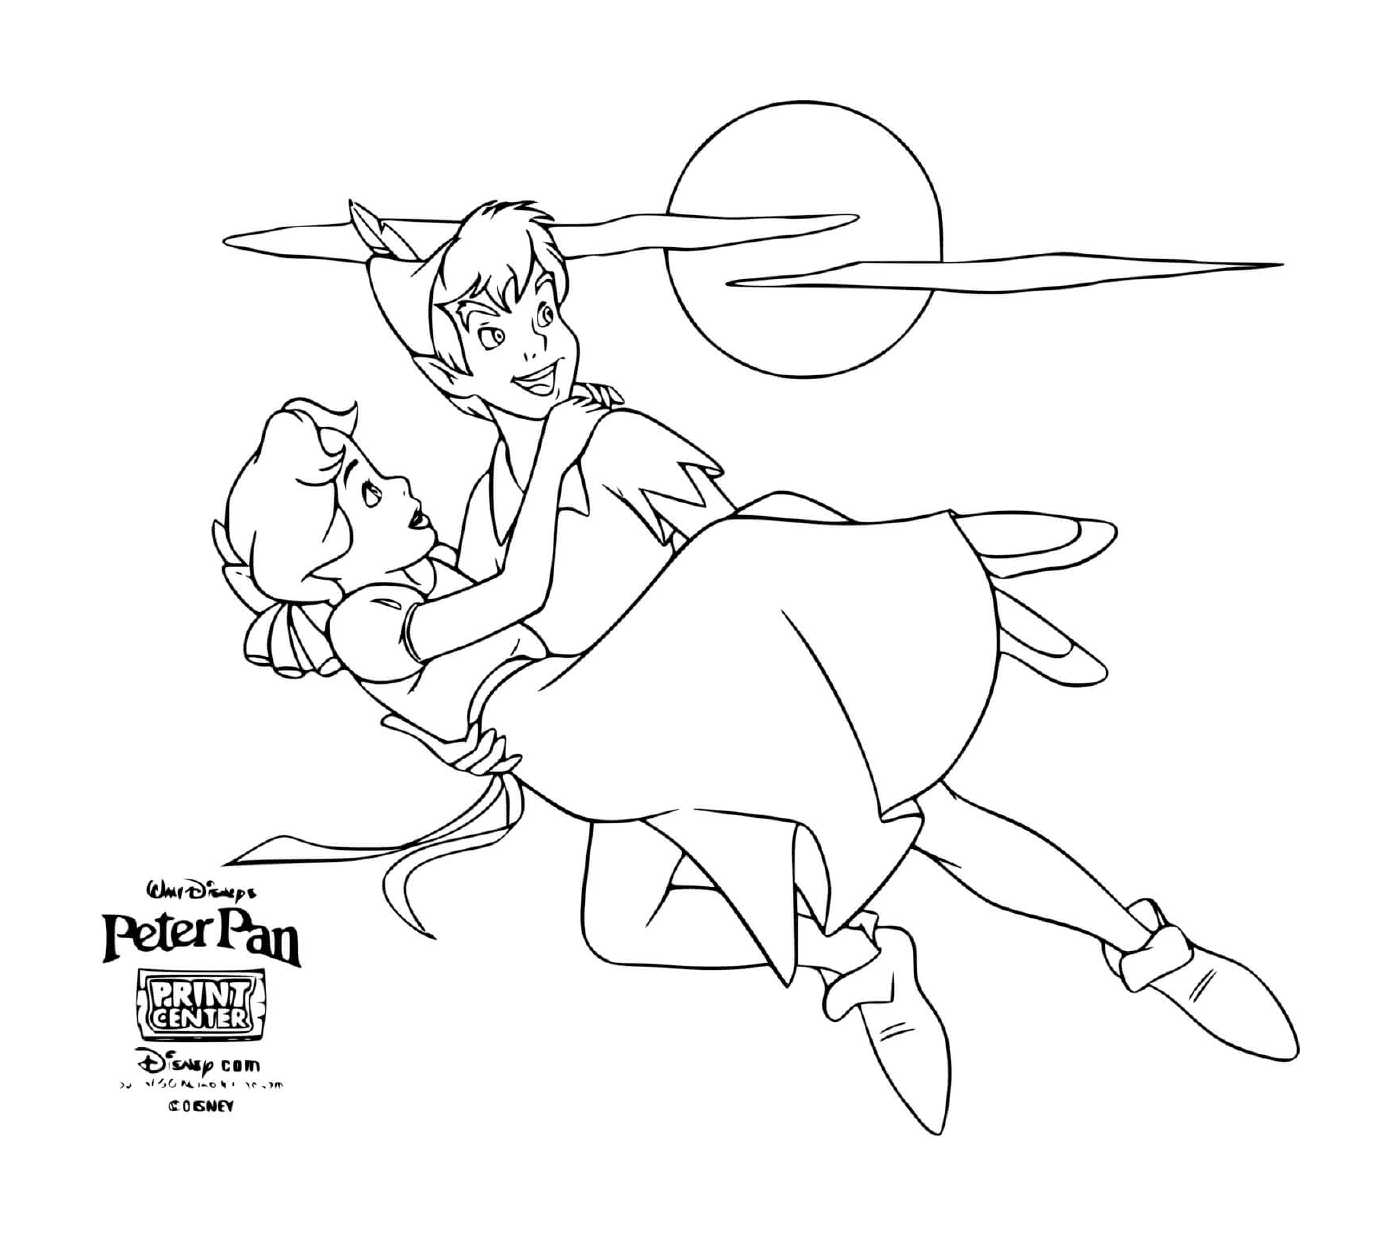  Peter Pan salva a la princesa Wendy 